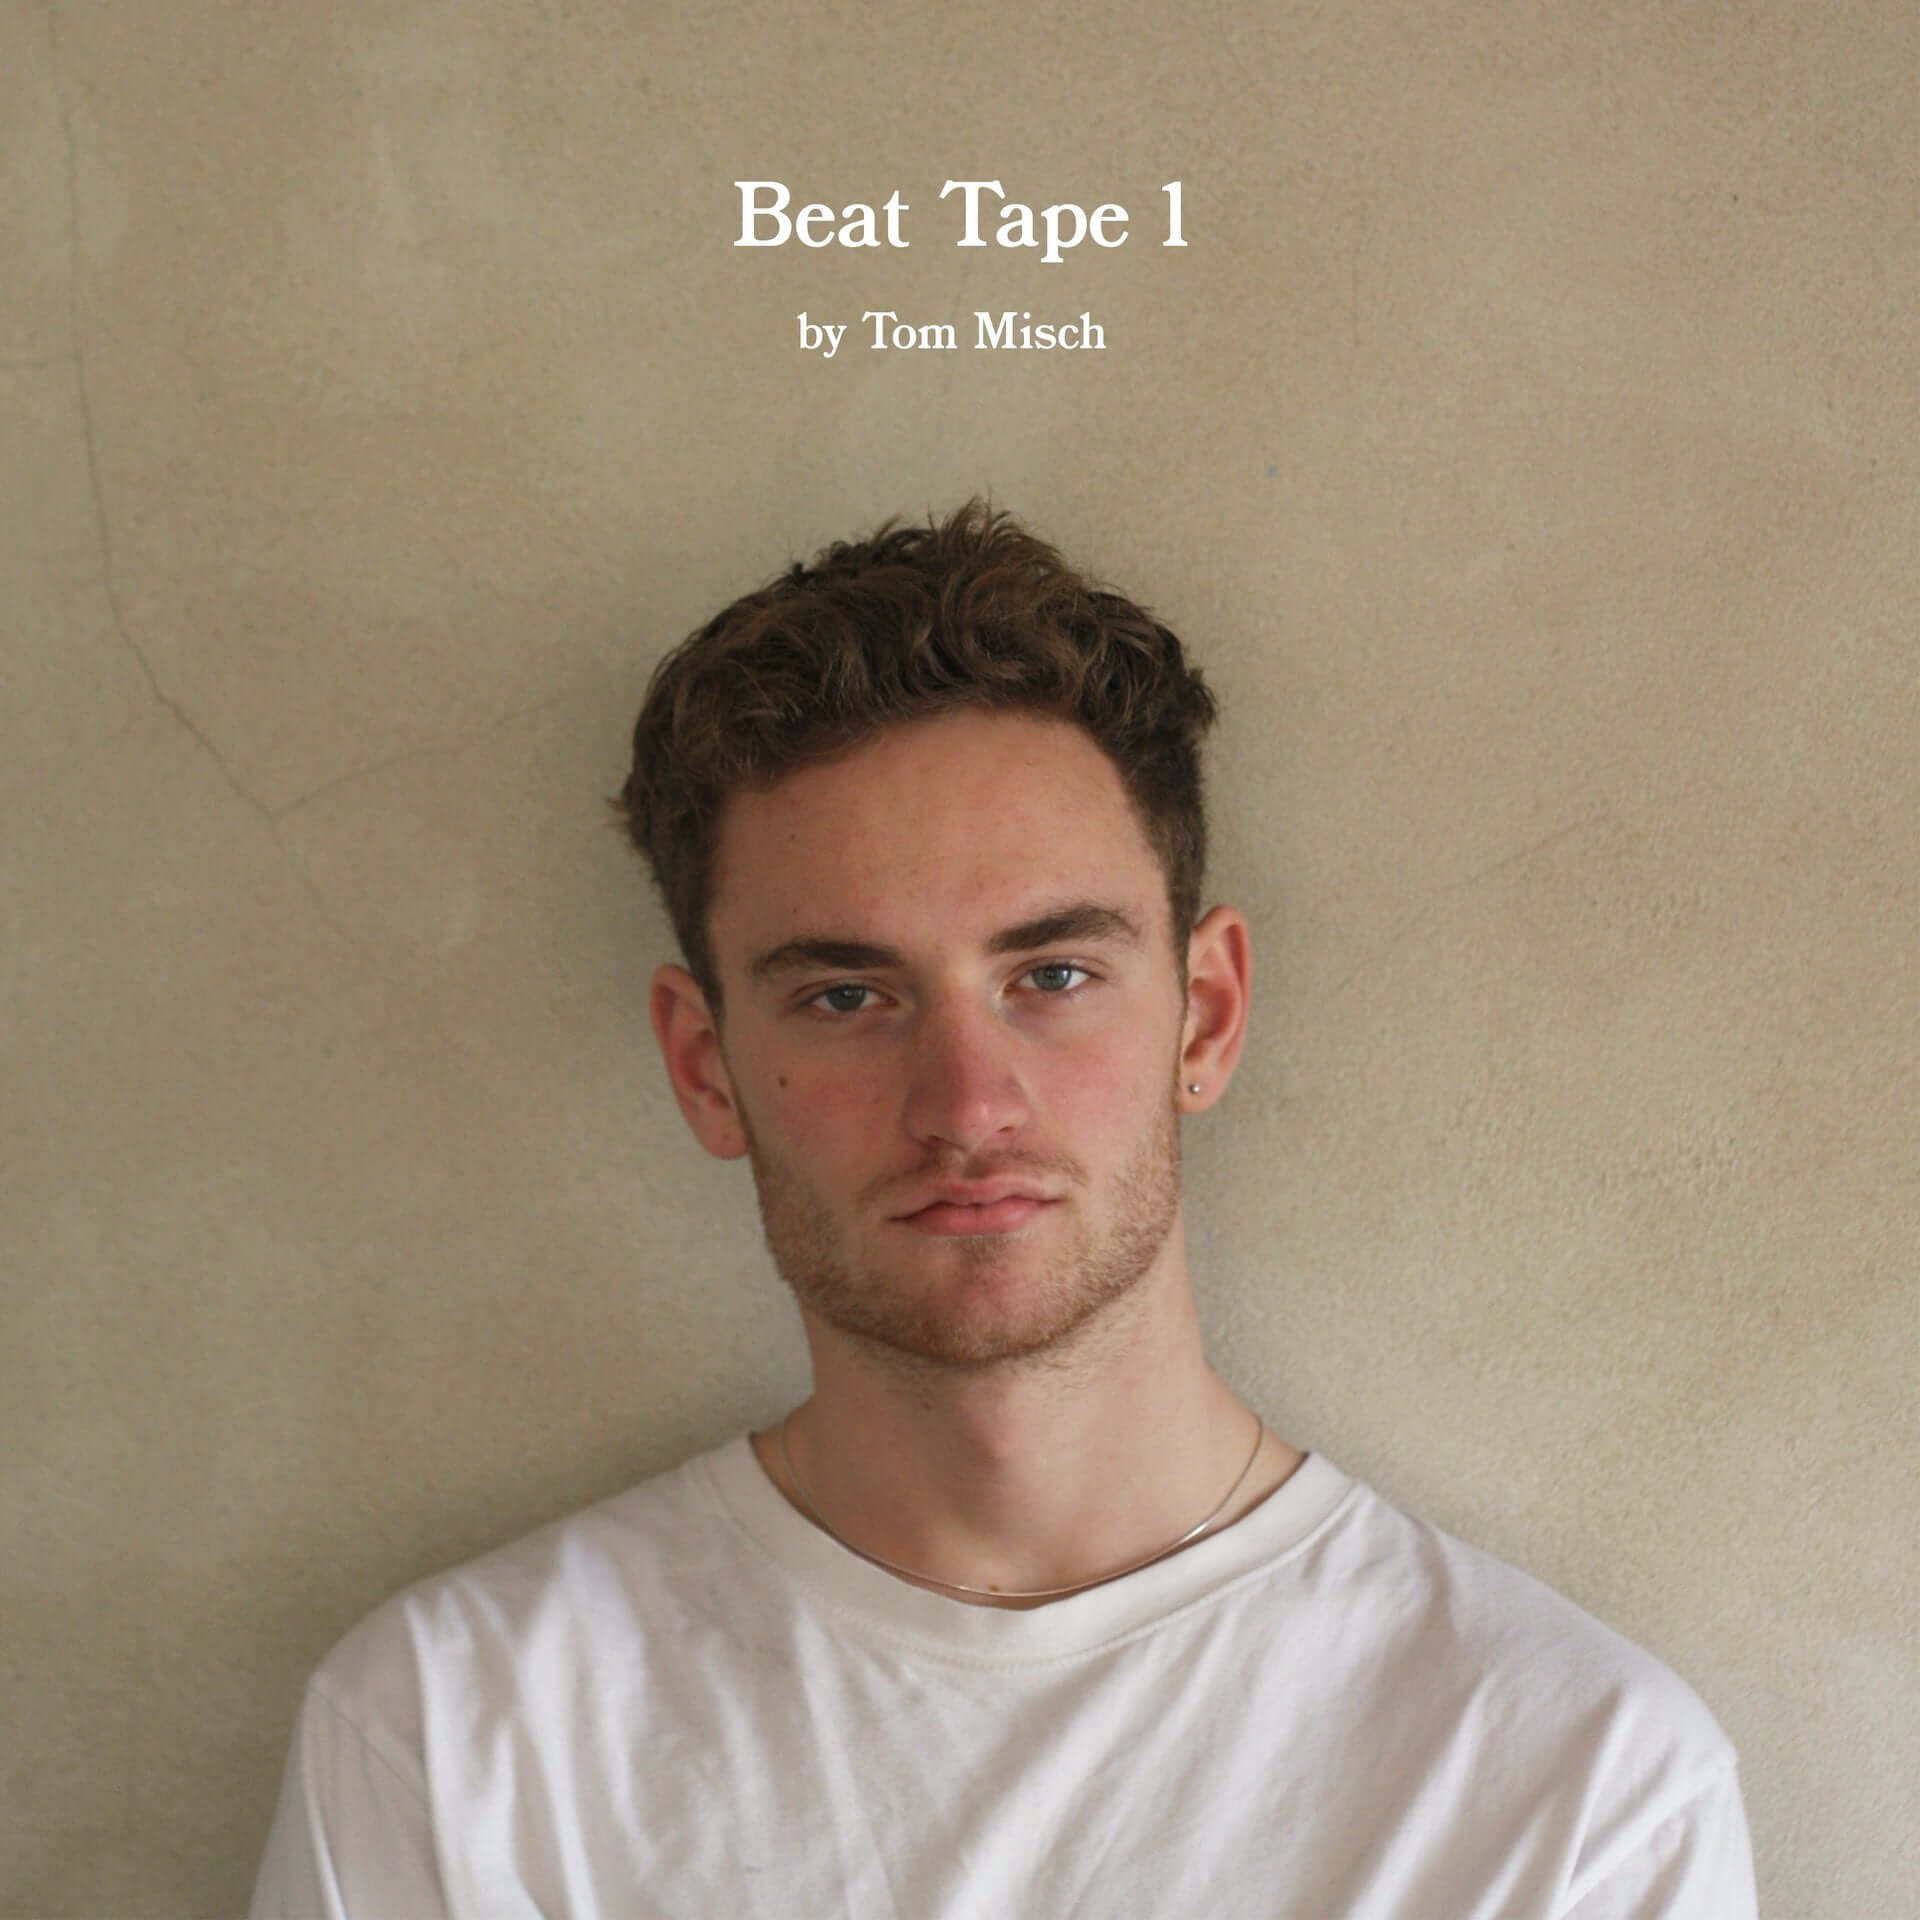 Tom Mischの傑作『Beat Tape 2』が5周年記念ゴールド盤LPでリリース決定！BEATINK公式サイトにて予約受付中 music2000821_tommisch_2-1920x1920